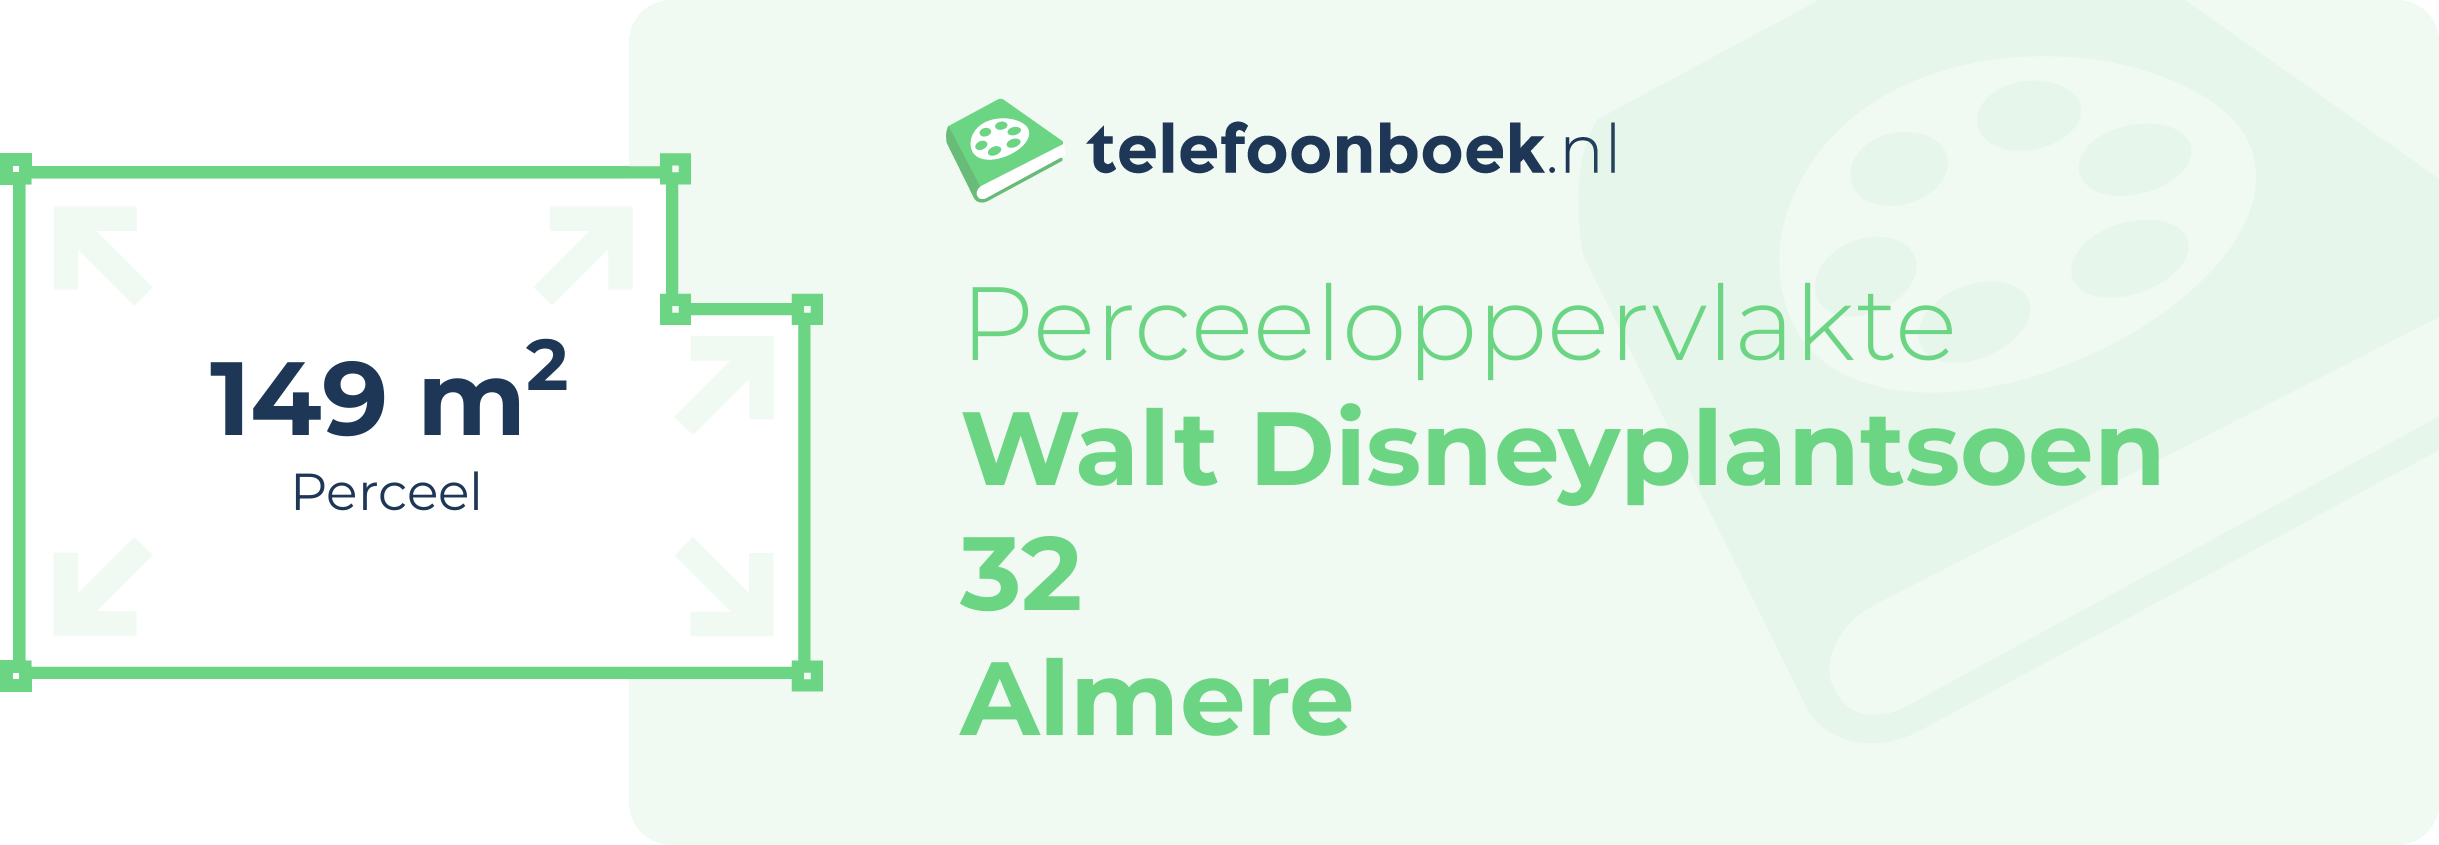 Perceeloppervlakte Walt Disneyplantsoen 32 Almere